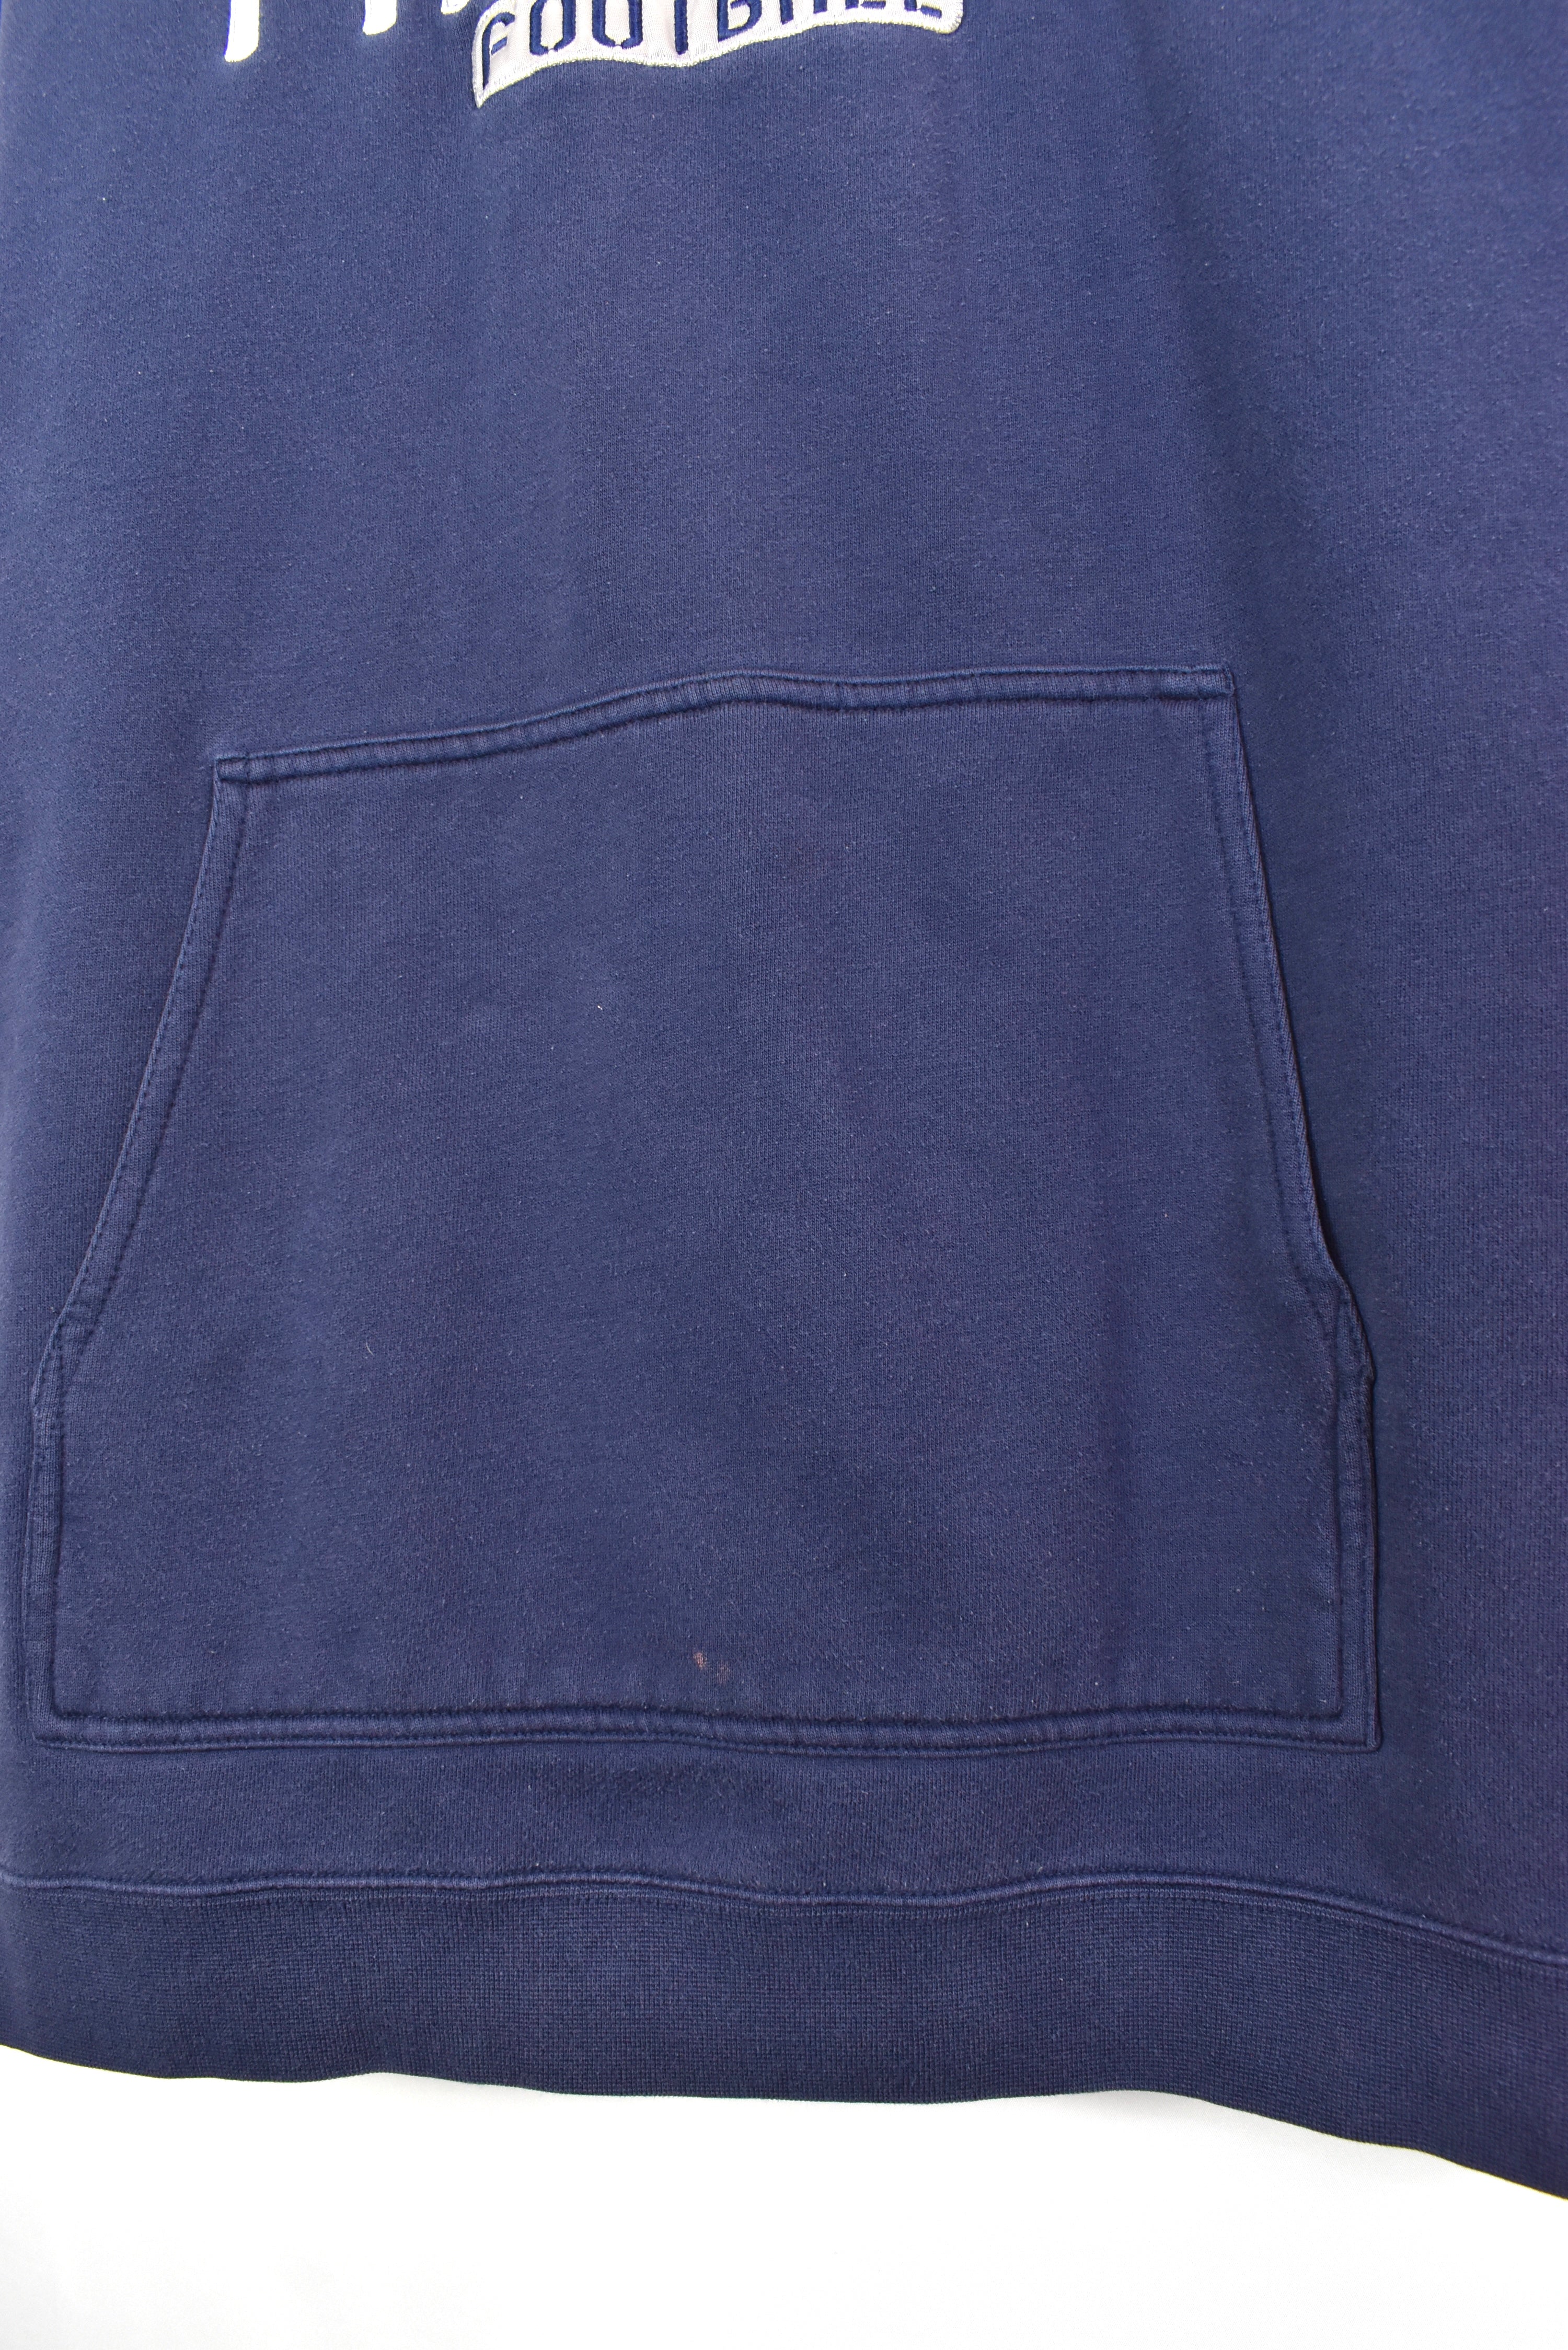 Vintage New England Patriots hoodie, NFL navy blue embroidered sweatshirt - AU XXL PRO SPORT